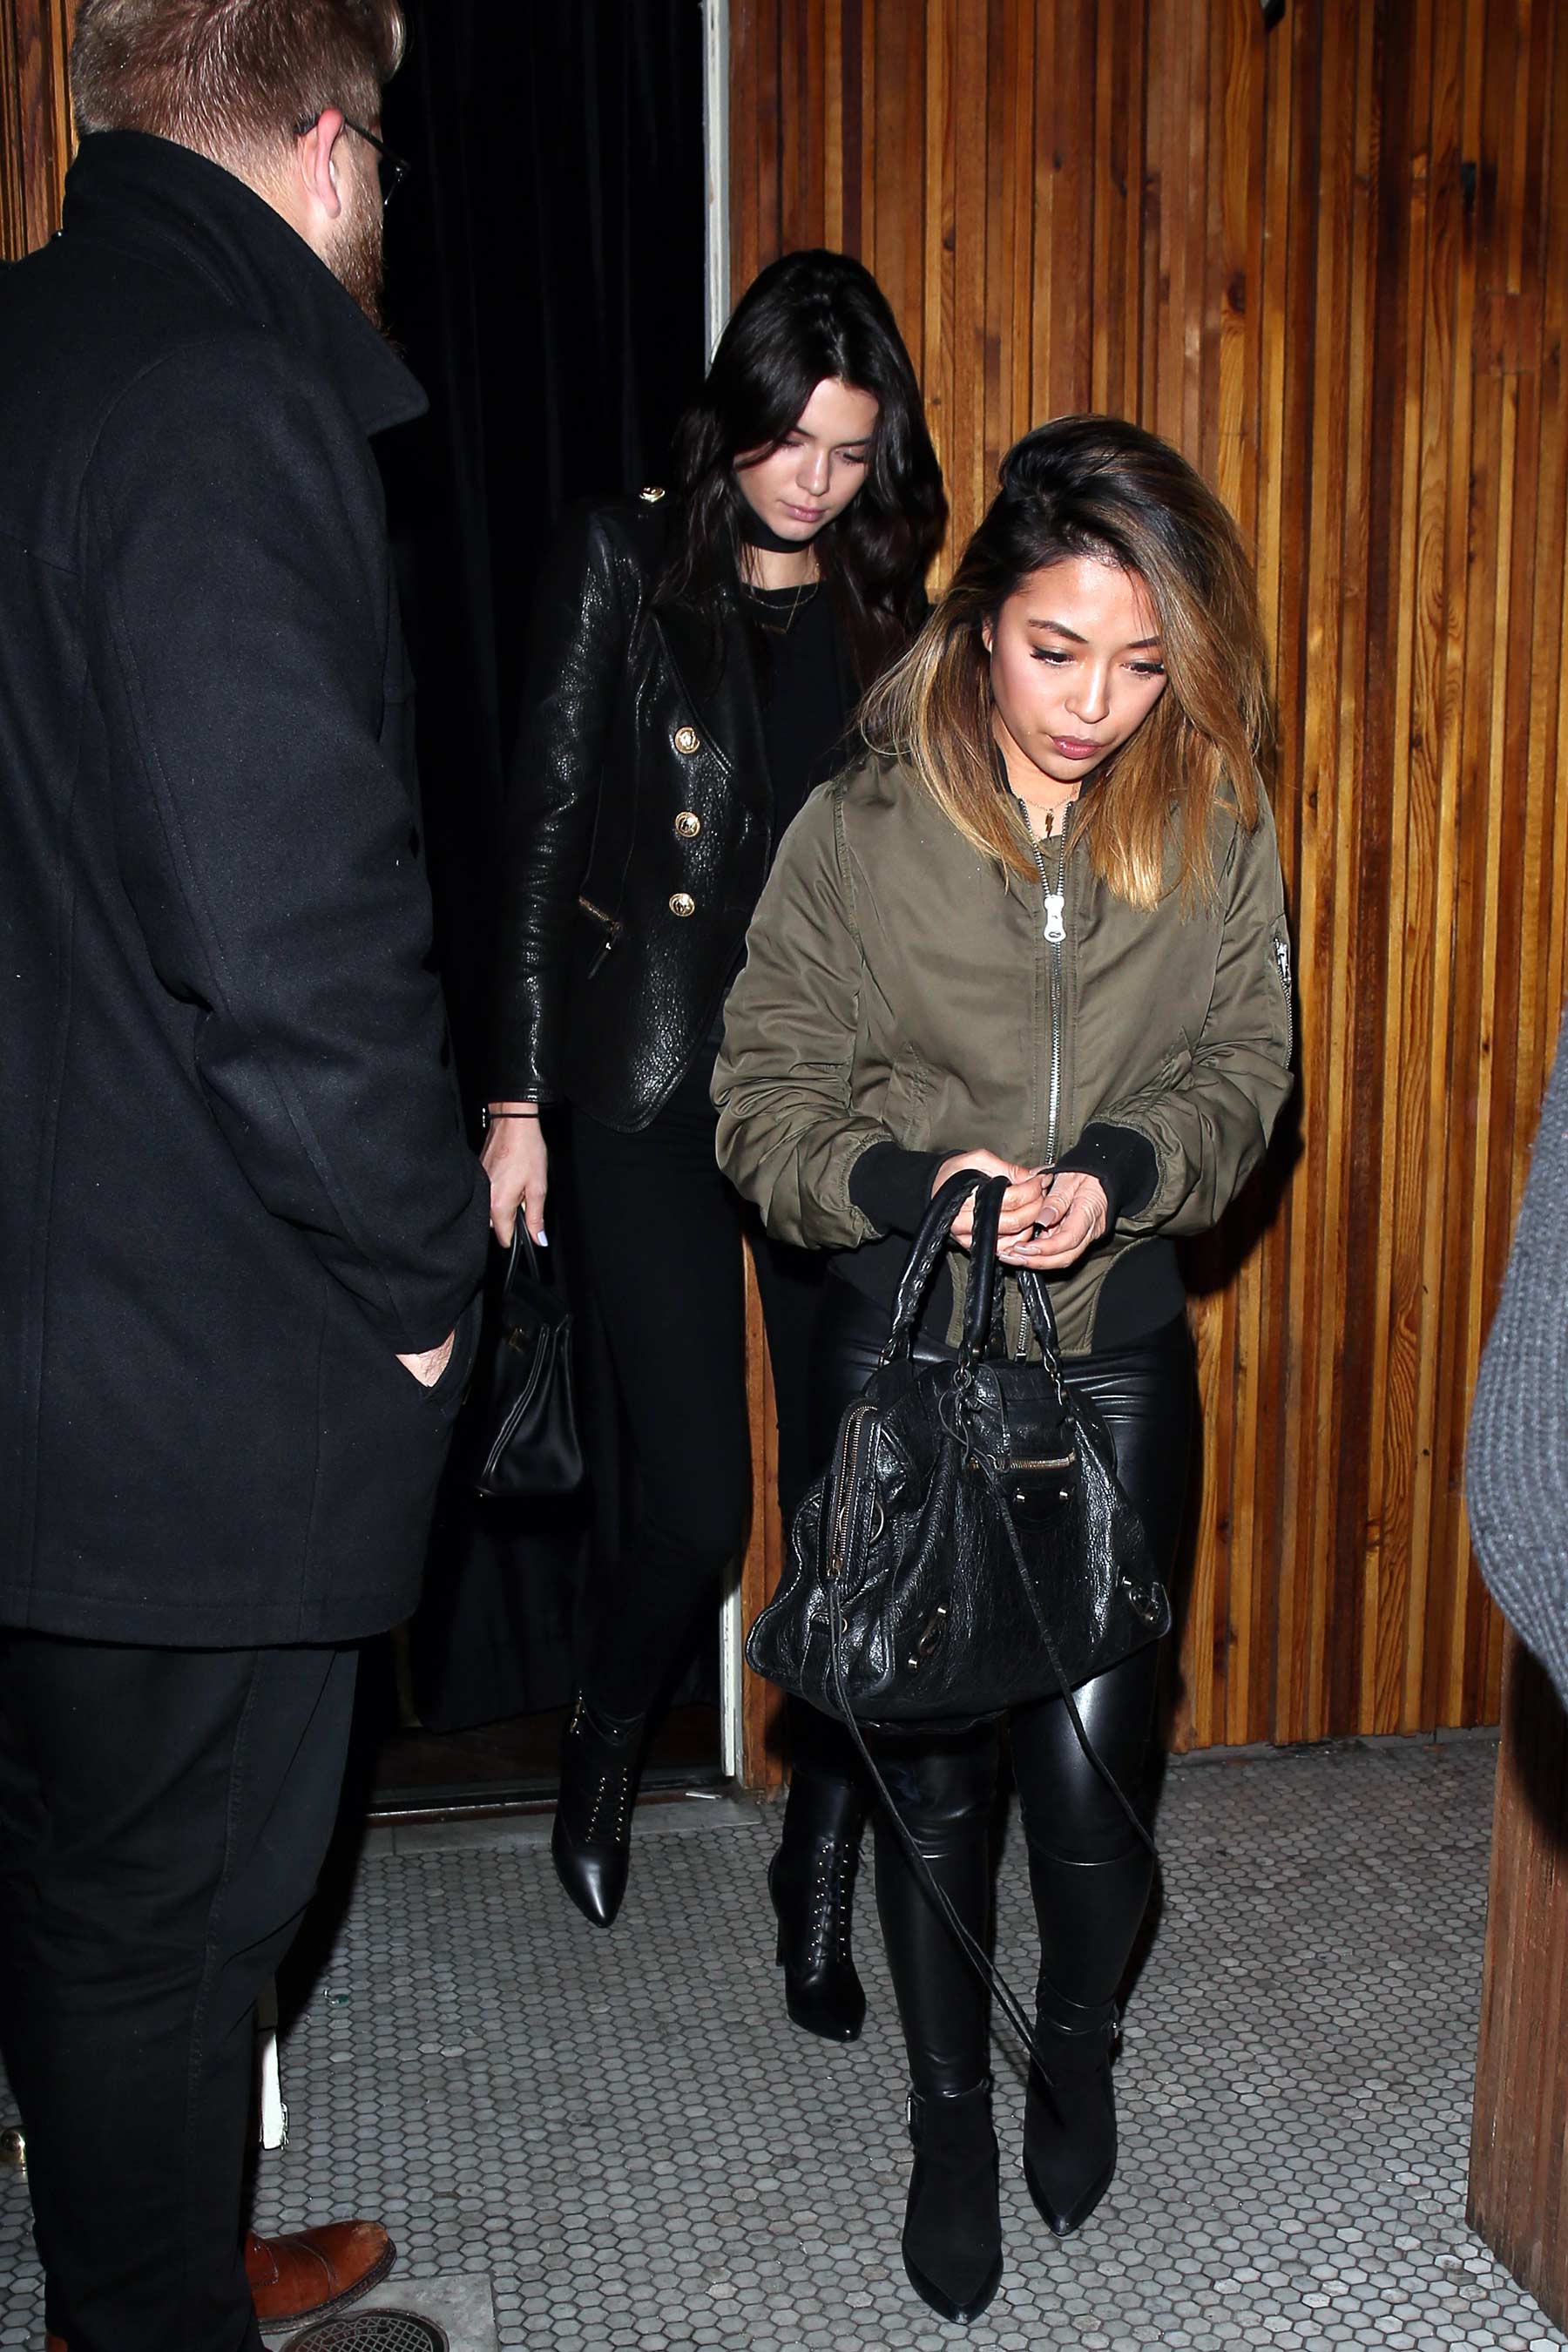 Kendall Jenner leaving The Nice Guy